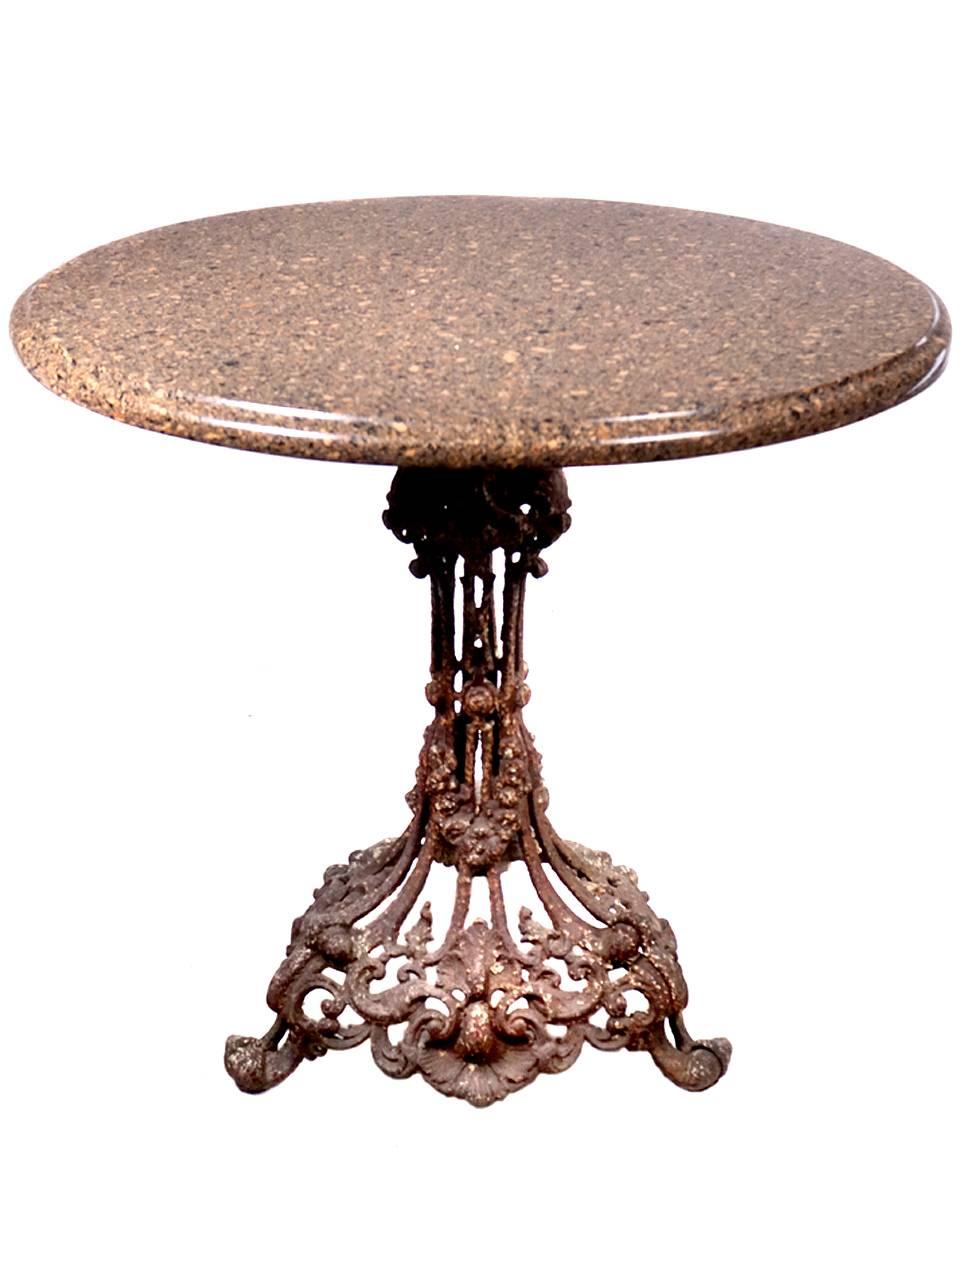 cast iron pedestal table base